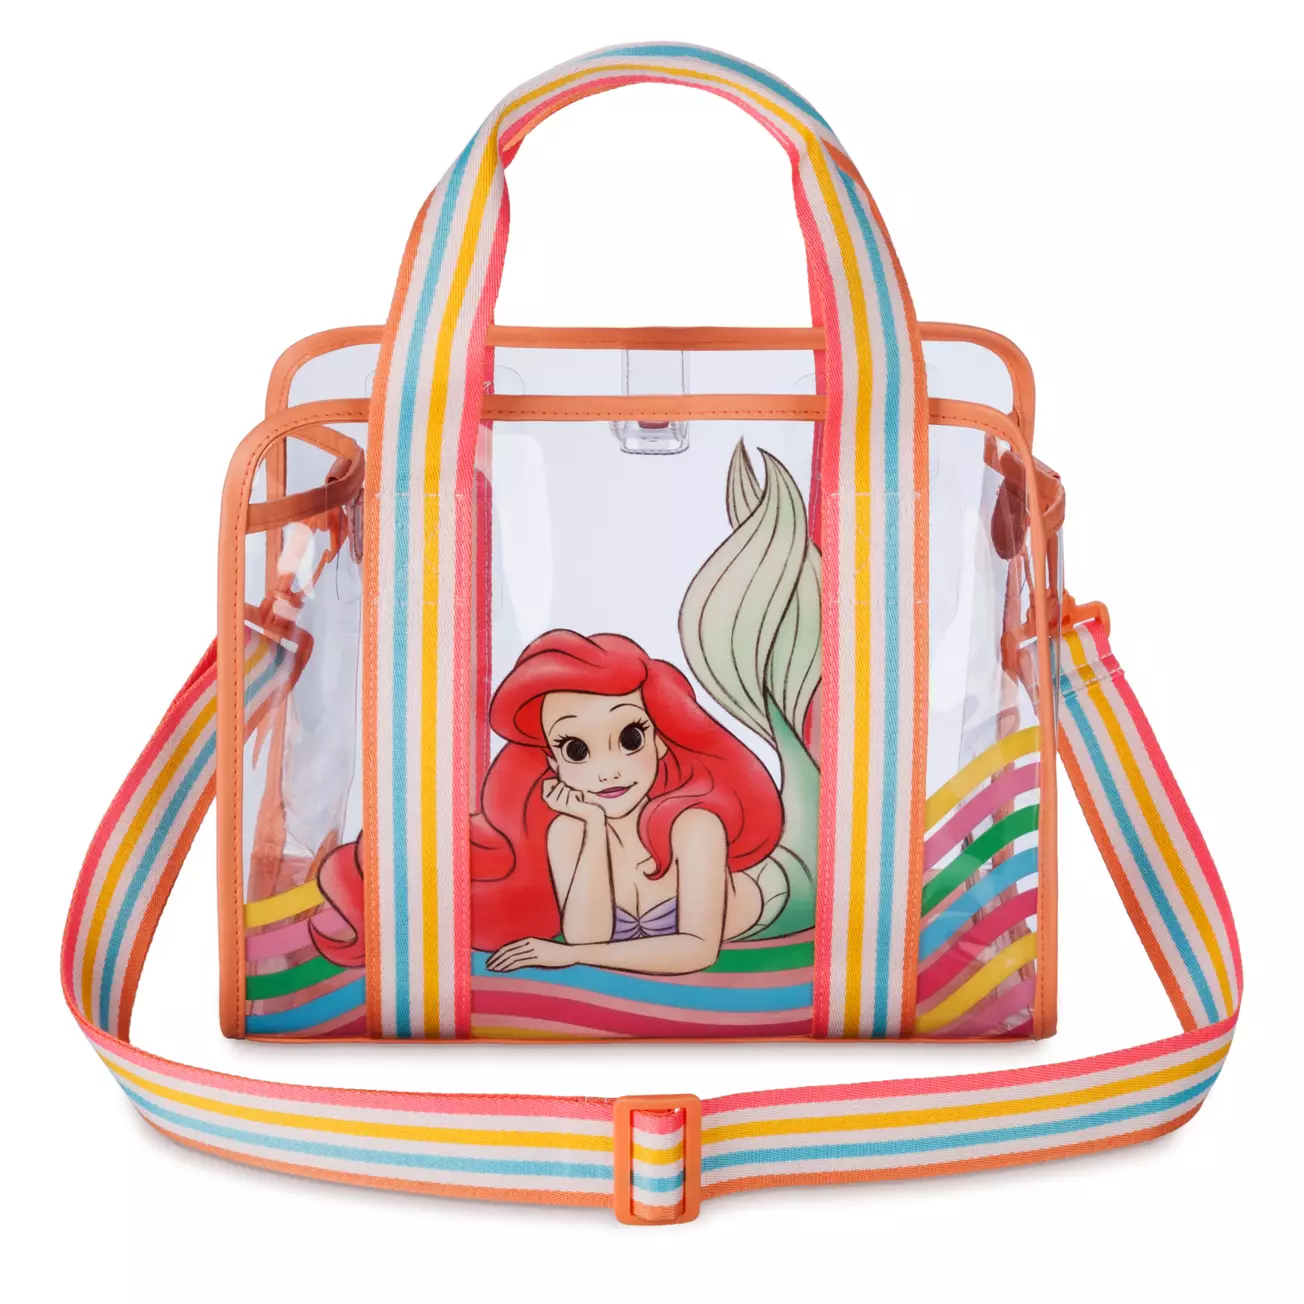   Disney Store The Little Mermaid Ariel Clear Swim Bag - $29.99